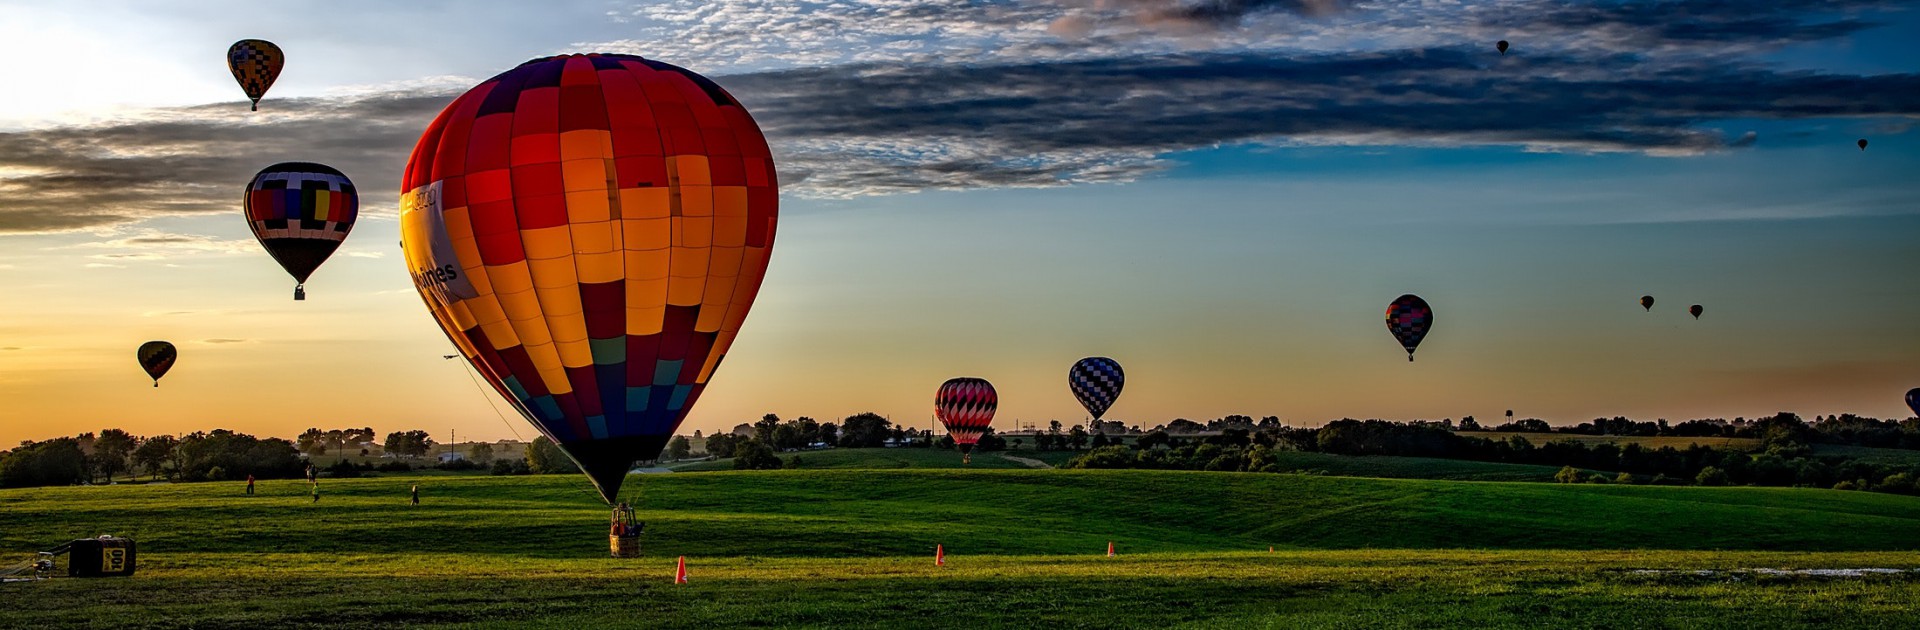 Heißluftballons - © 12019/pixabay.com